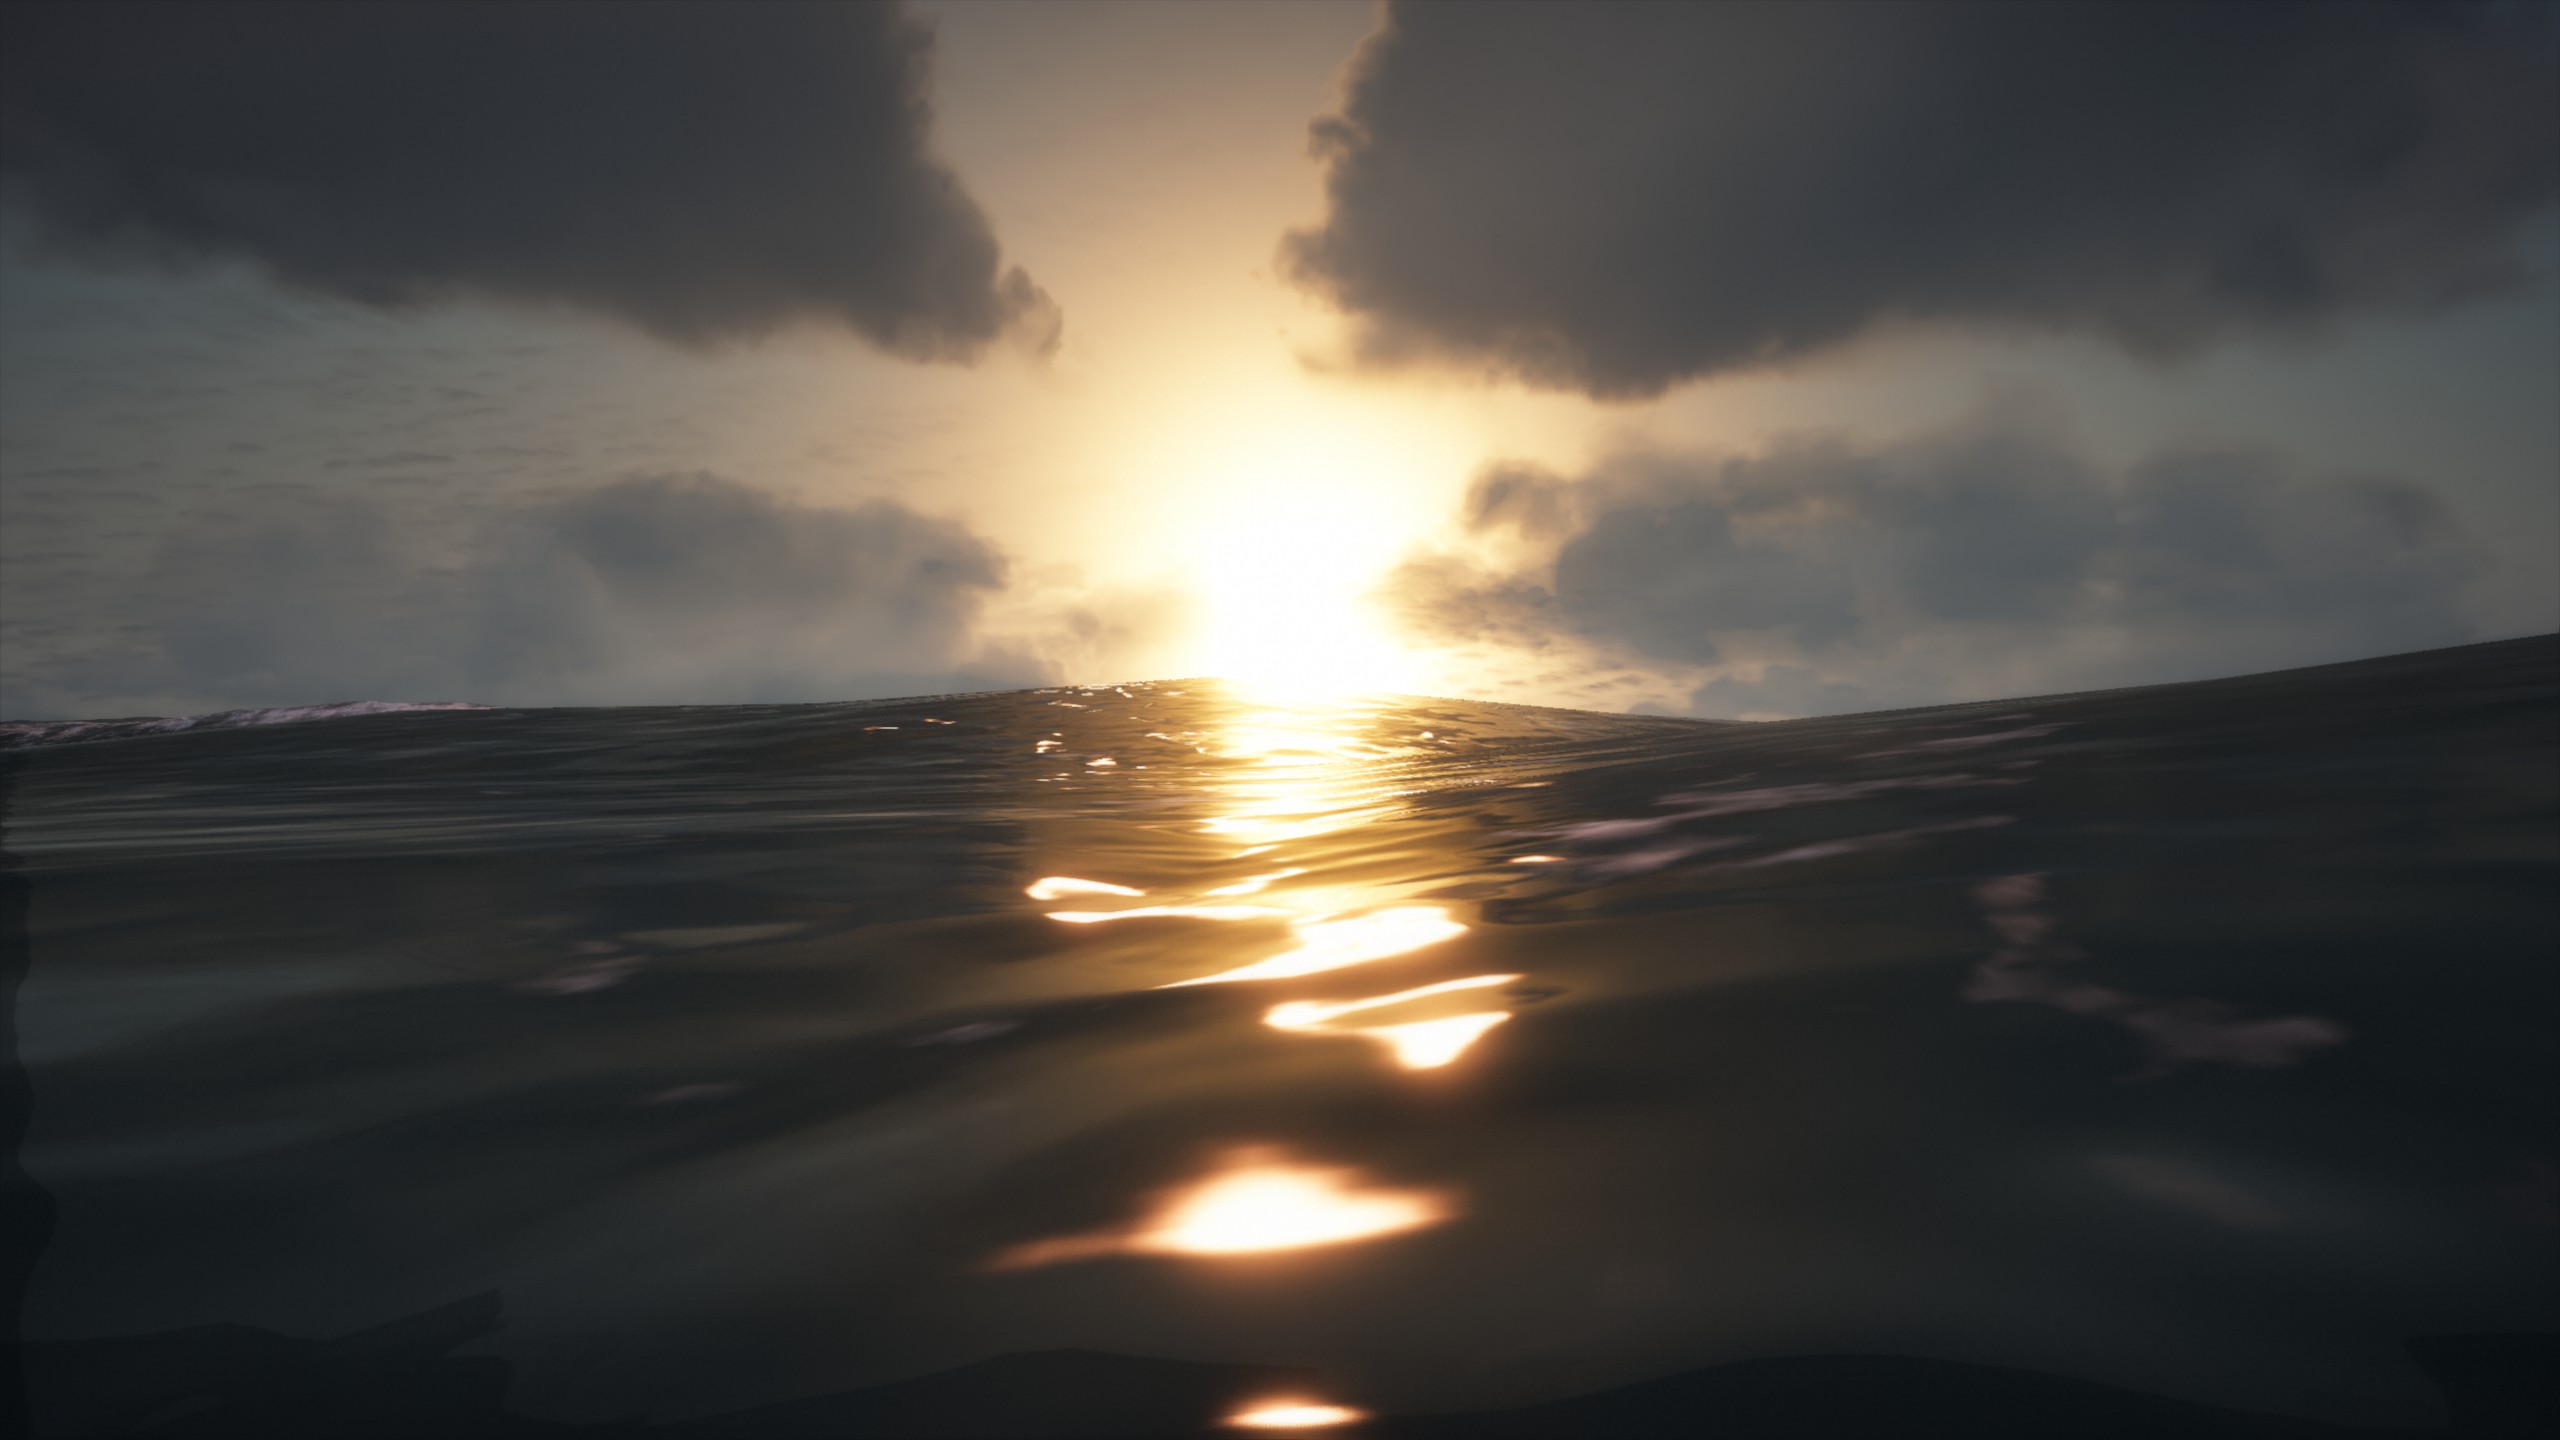 Grand Theft Auto V Ferrari Sunset Waves Video Games Sunset Glow Clouds Water CGi 2560x1440